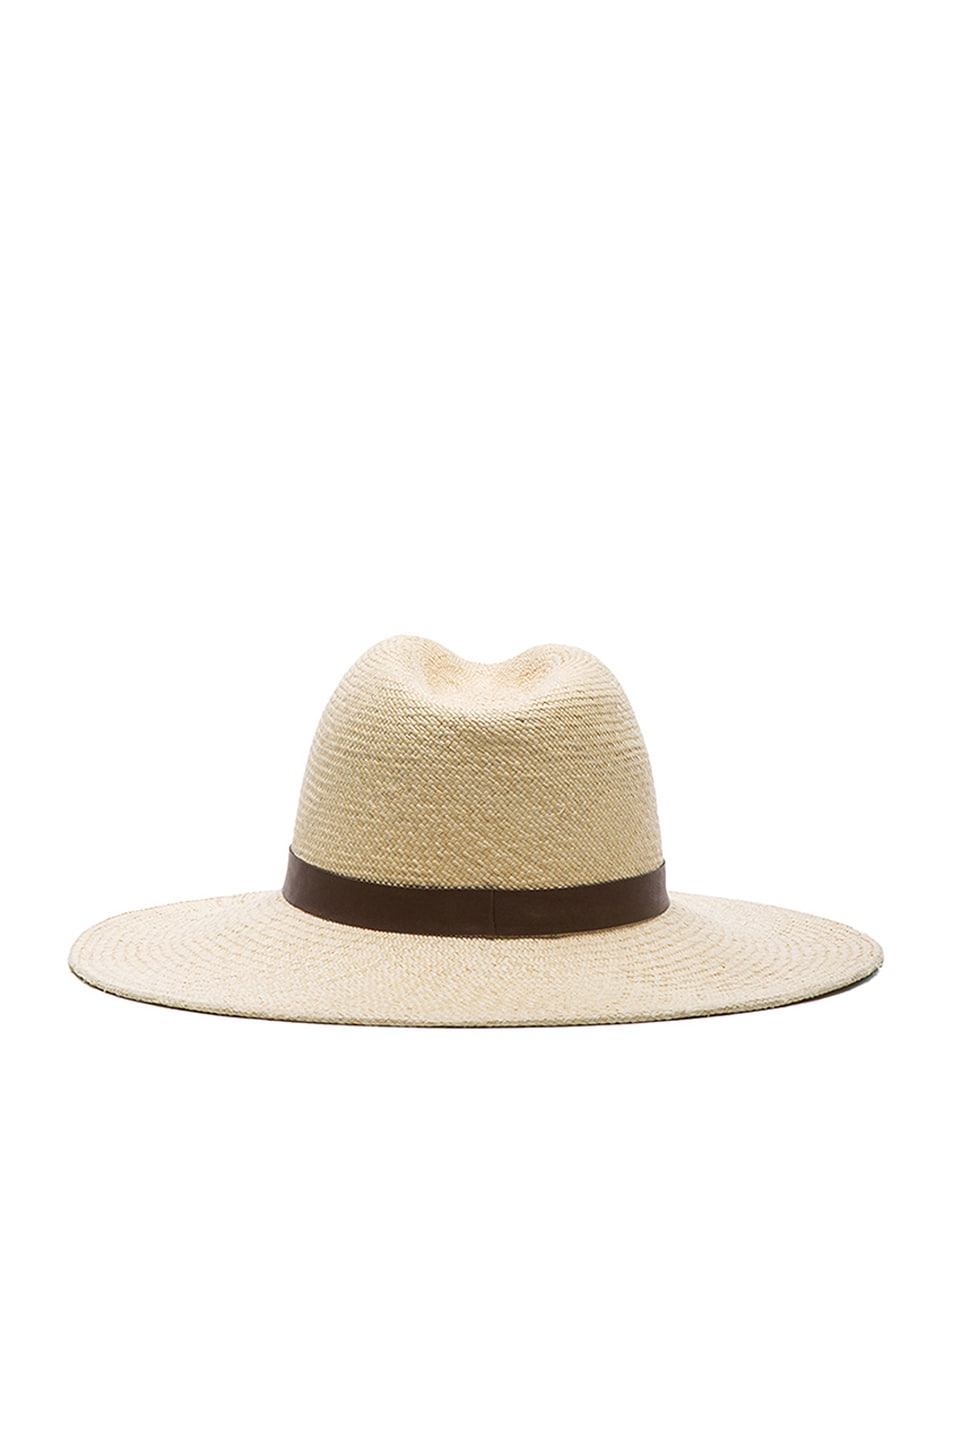 Janessa Leone Gloria Straw Hat in Creme | FWRD